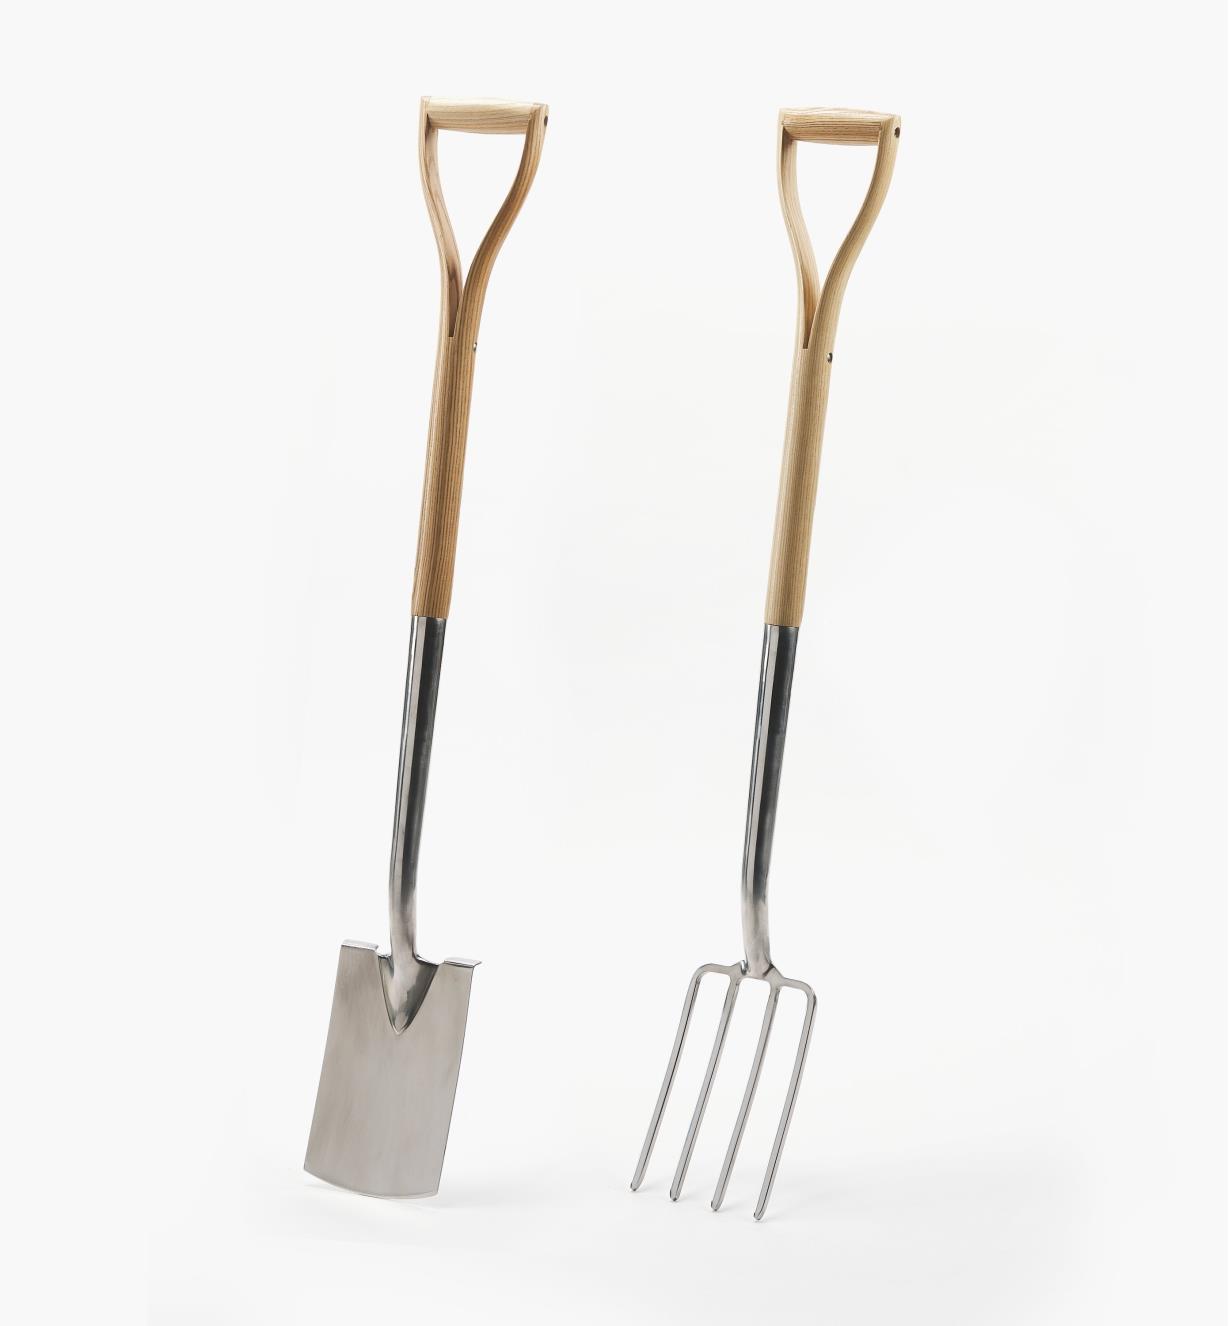 PG162 - Stainless-Steel Wood-Handled Digging Spade & Fork